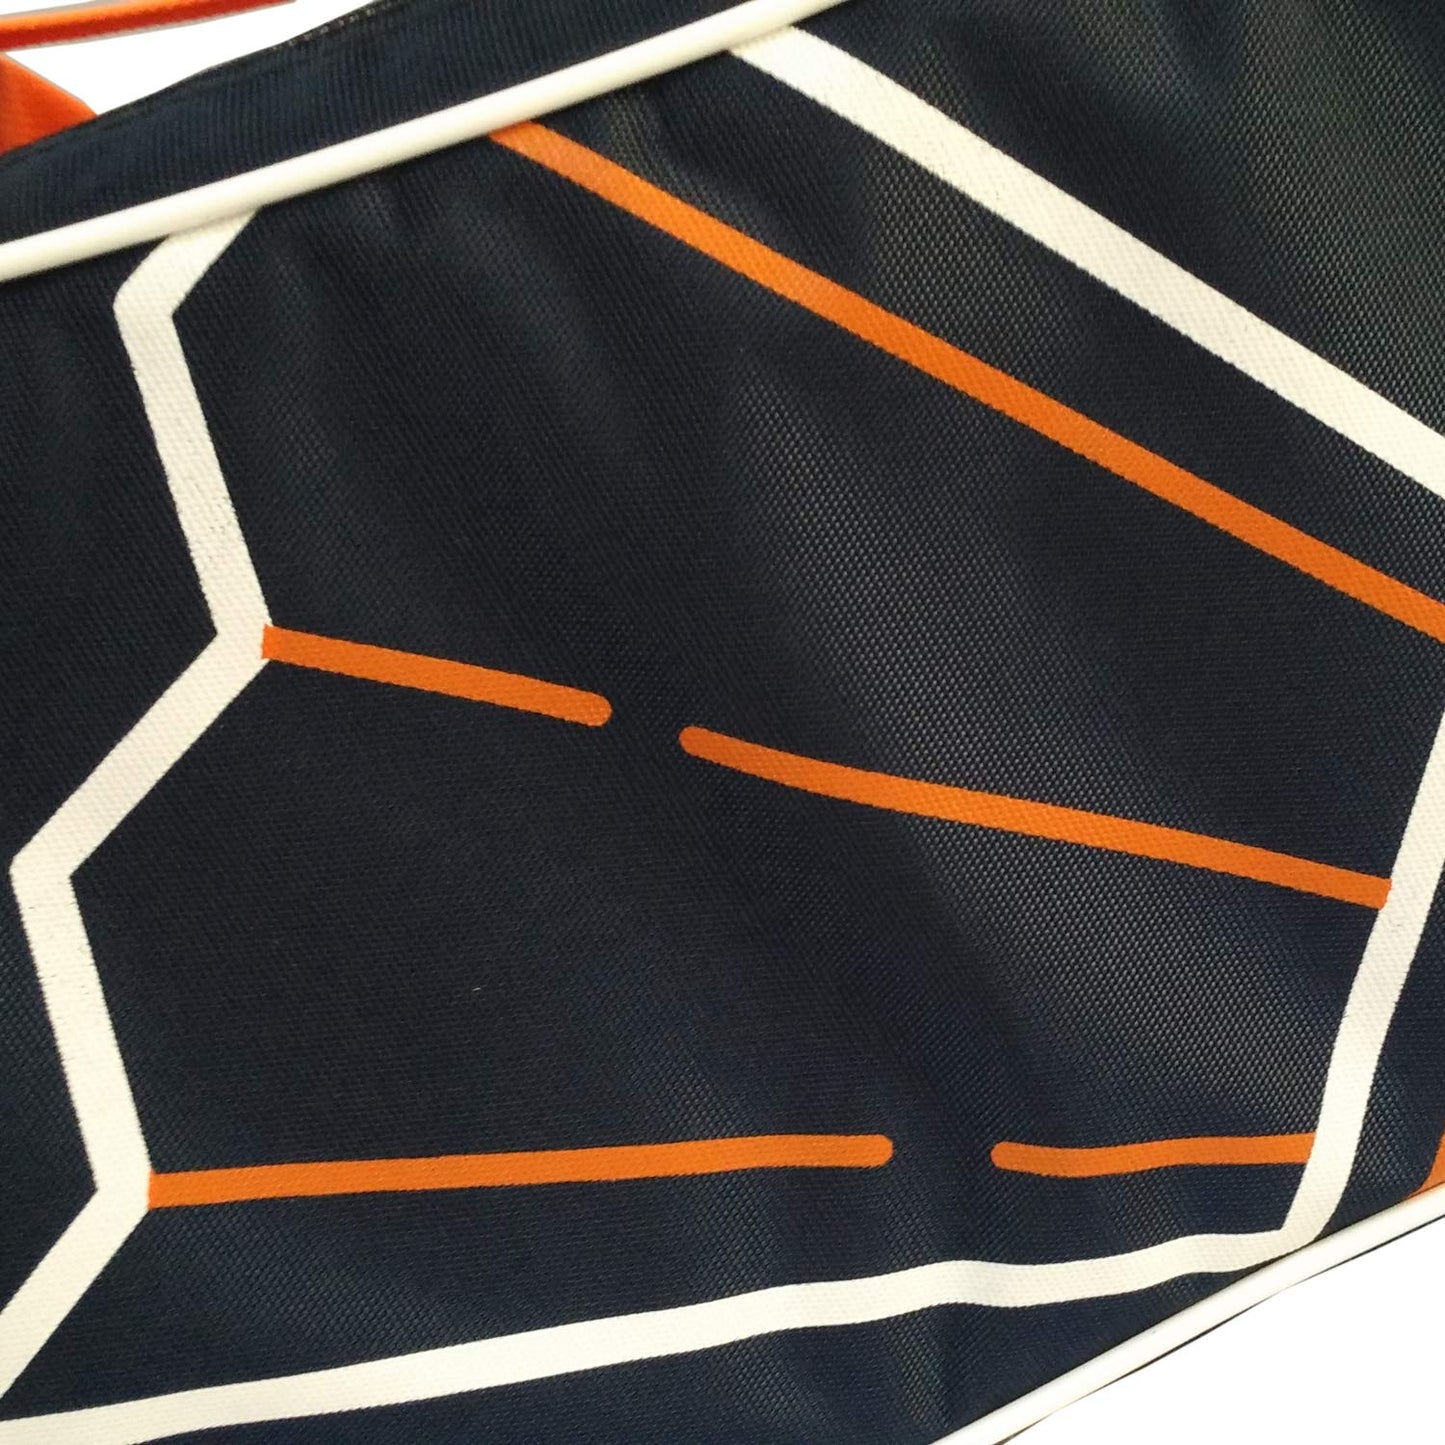 Prokick Neon Series Badminton Kitbag with Double Zipper Compartments - Best Price online Prokicksports.com